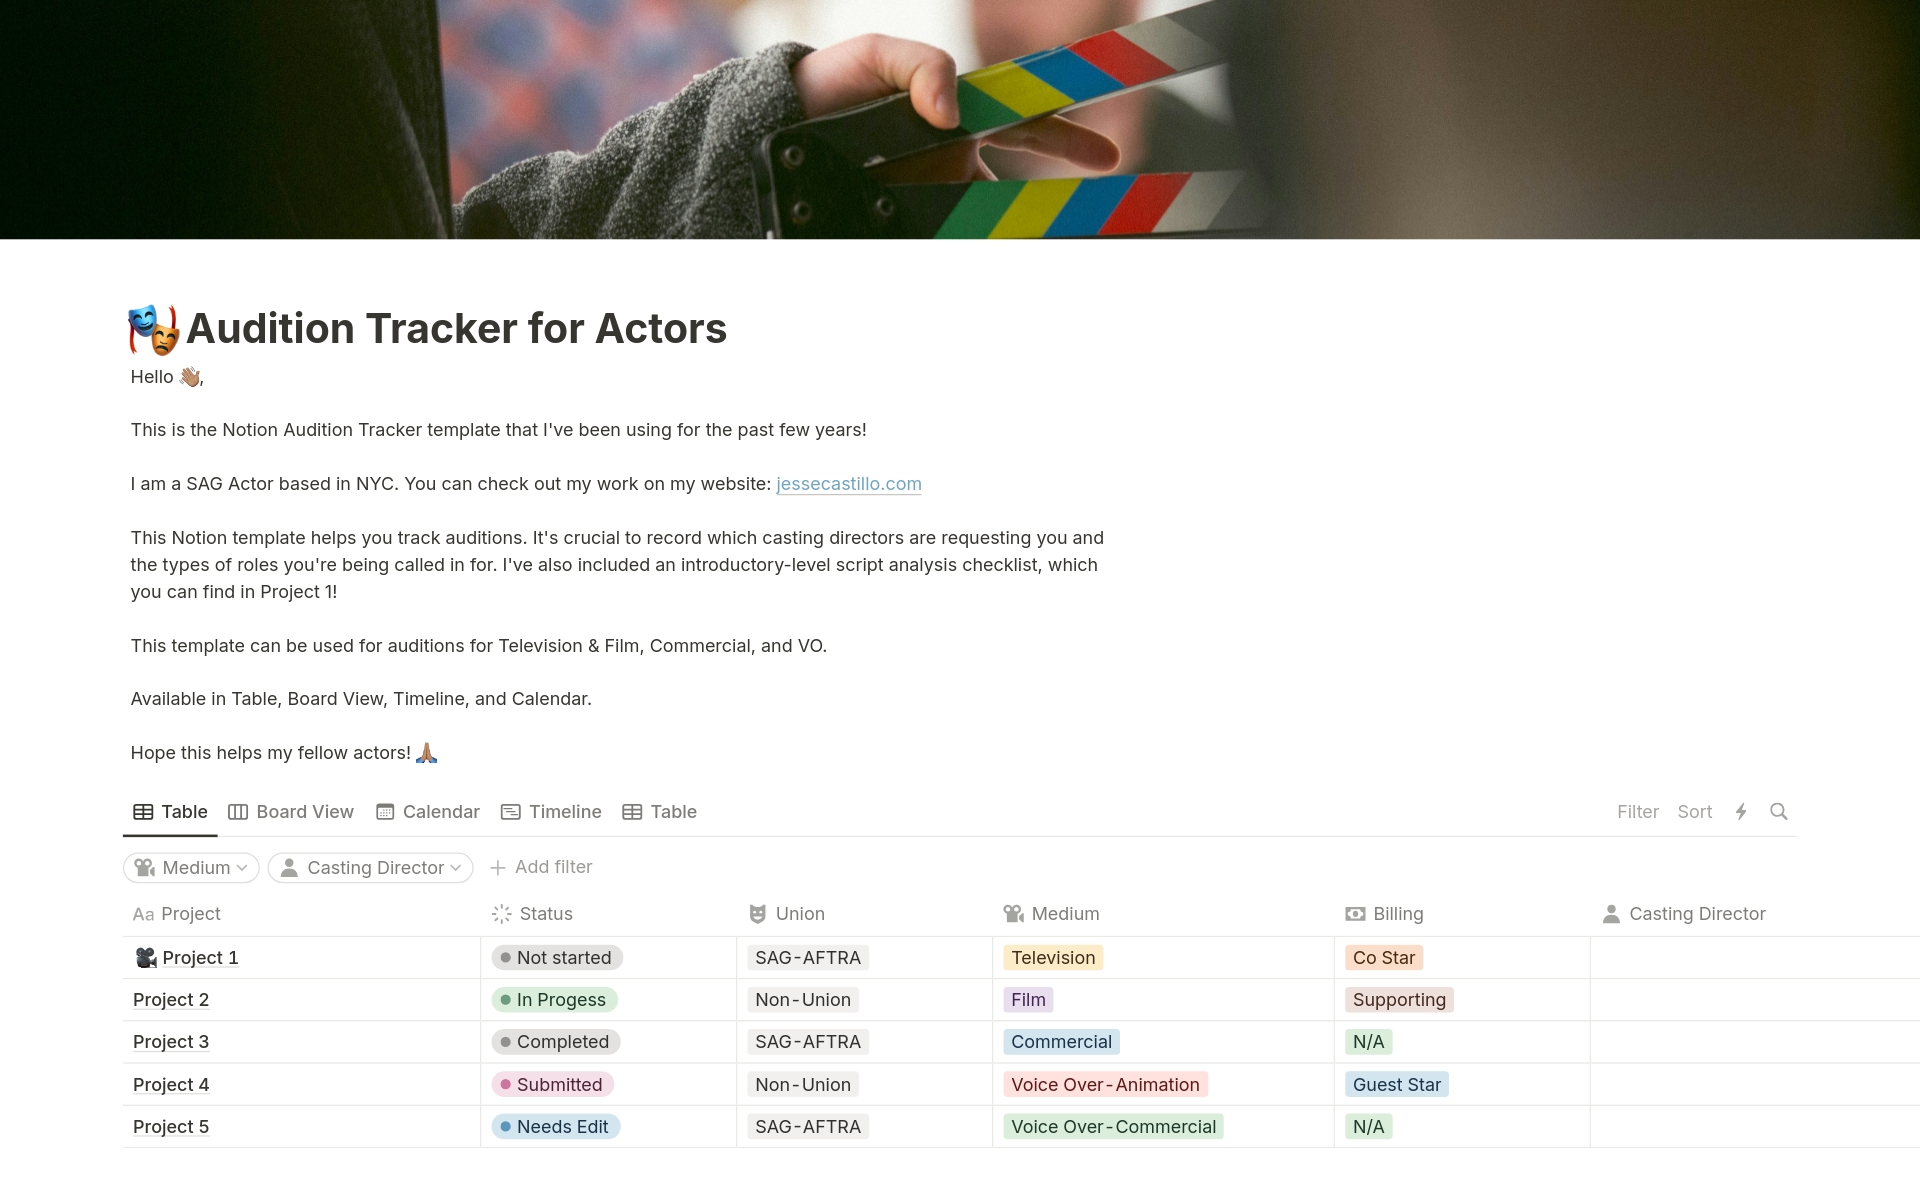 Audition Tracker for Actors님의 템플릿 미리보기